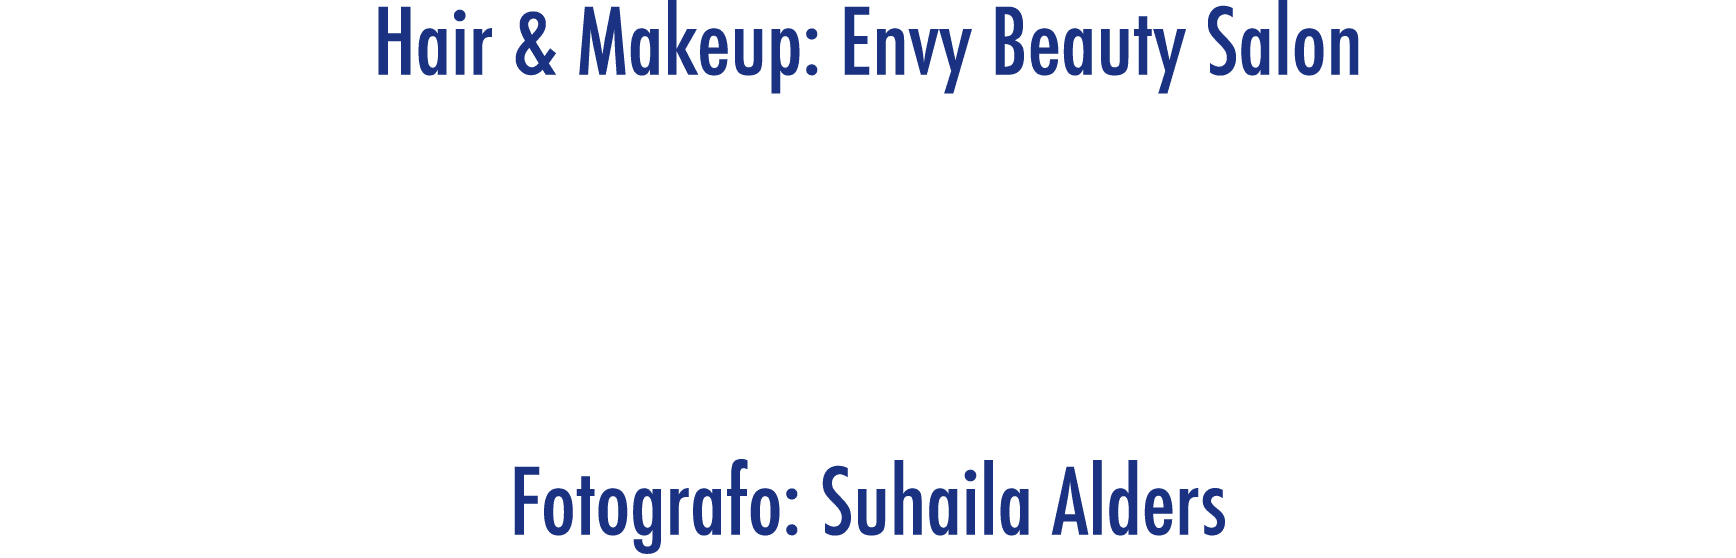 Hair & Makeup: Envy Beauty Salon  Fotografo: Suhaila Alders